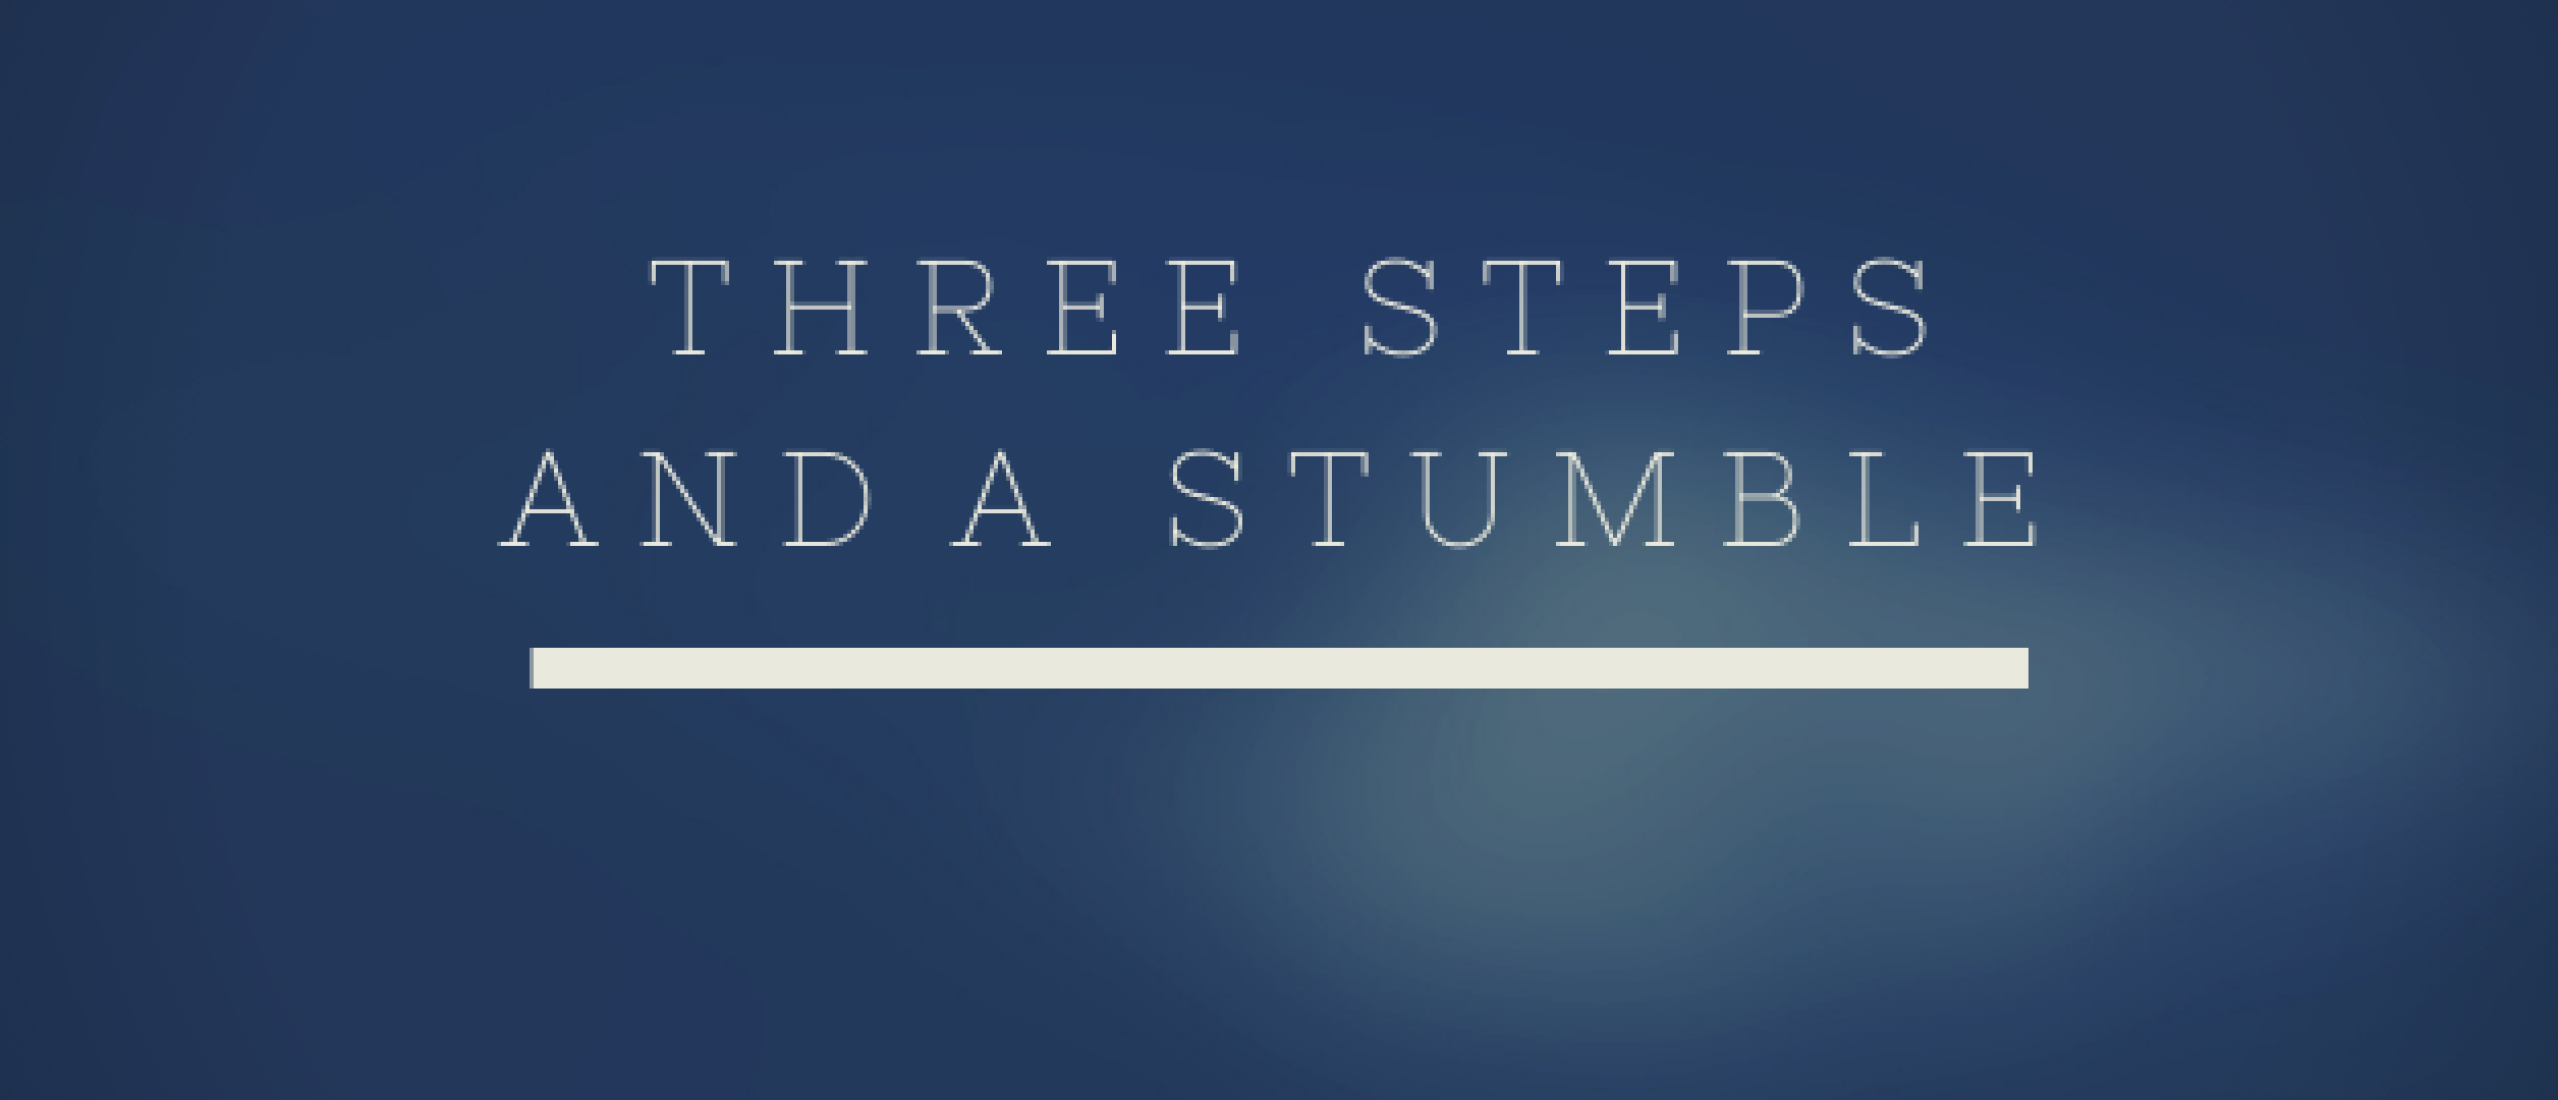 Three steps and a stumble